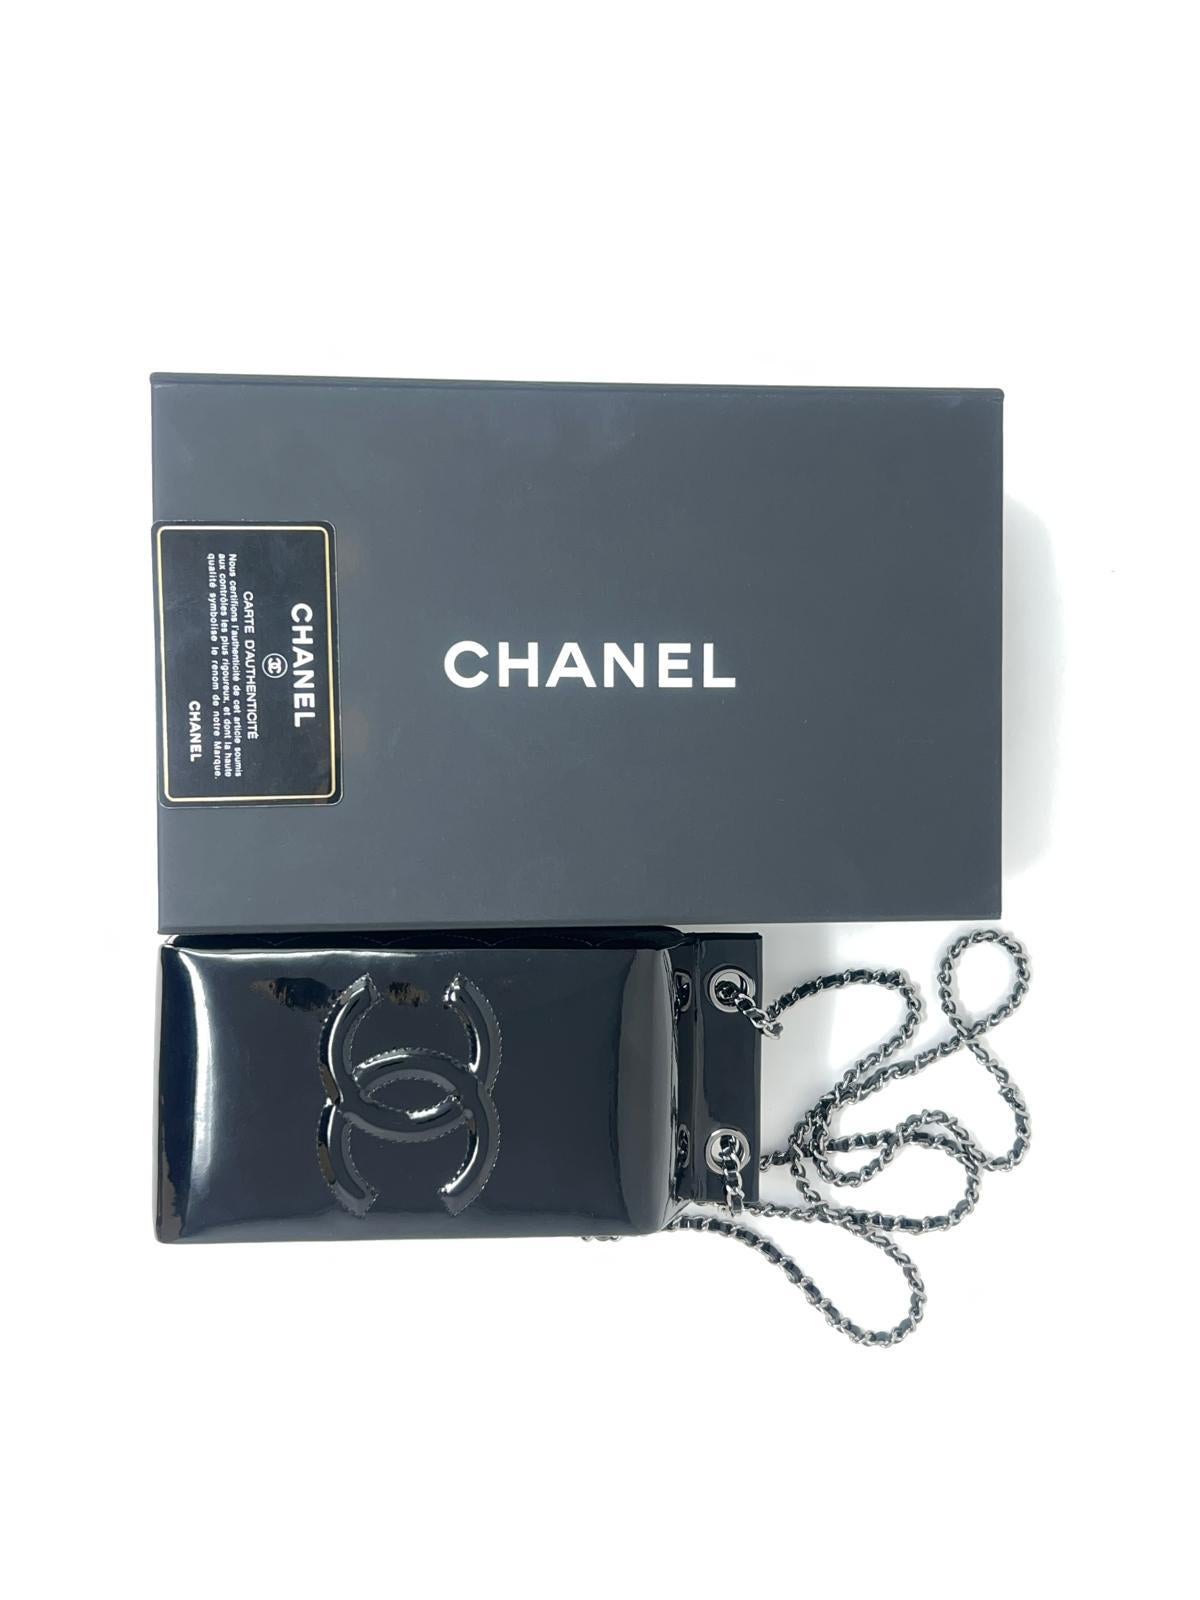 Chanel Black Patent Milk Carton Bag Silver Hardware Fall / Winter 2014 For Sale 13